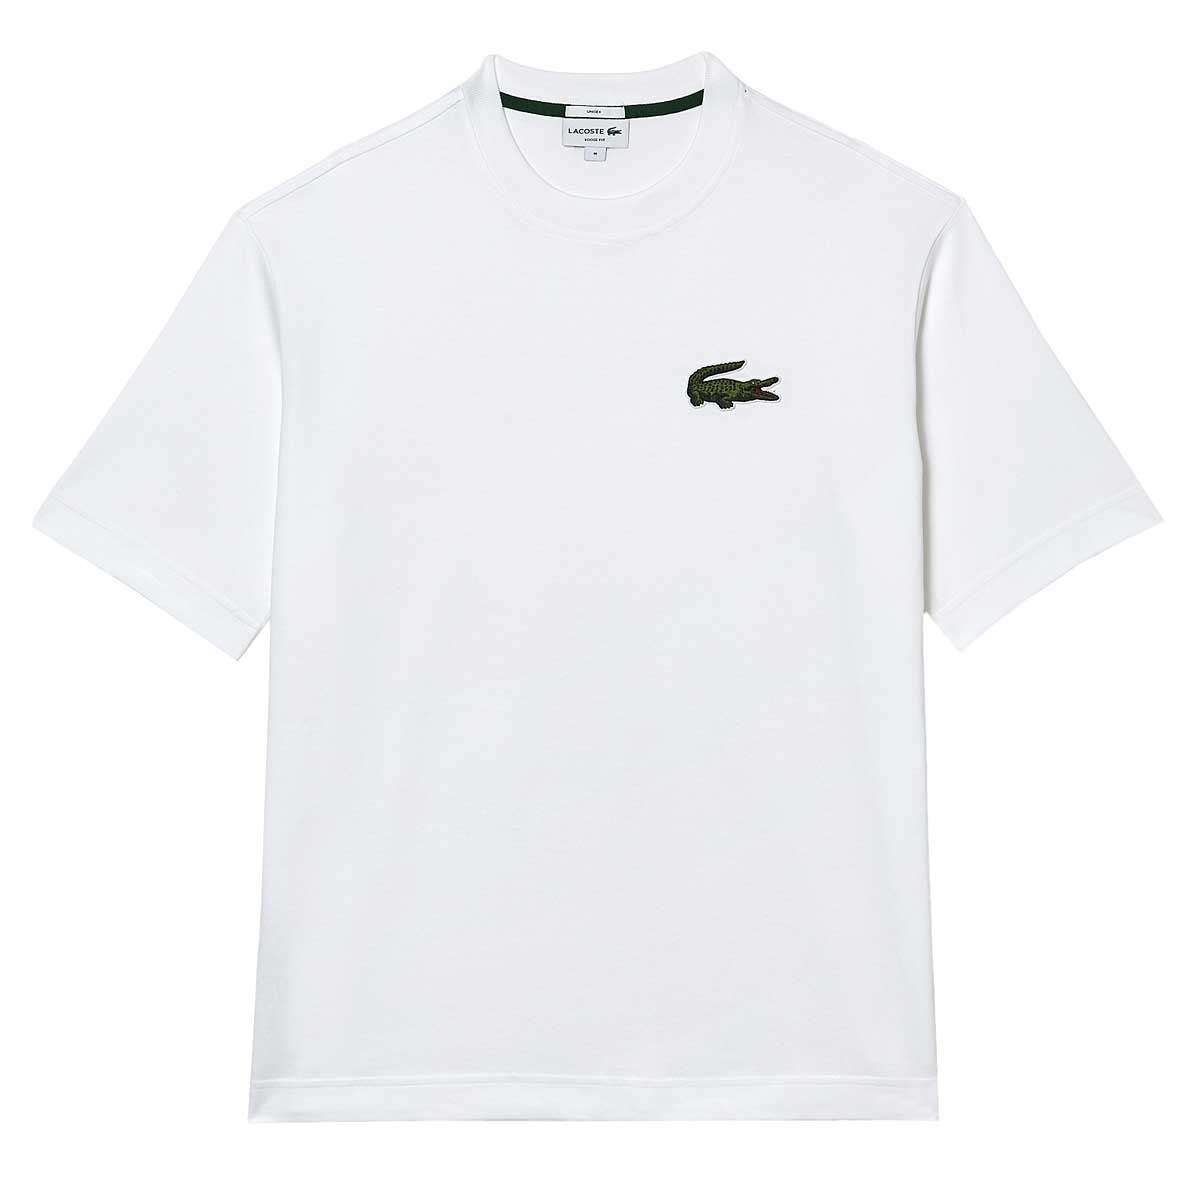 Image of Lacoste Big Croc T-shirt, White